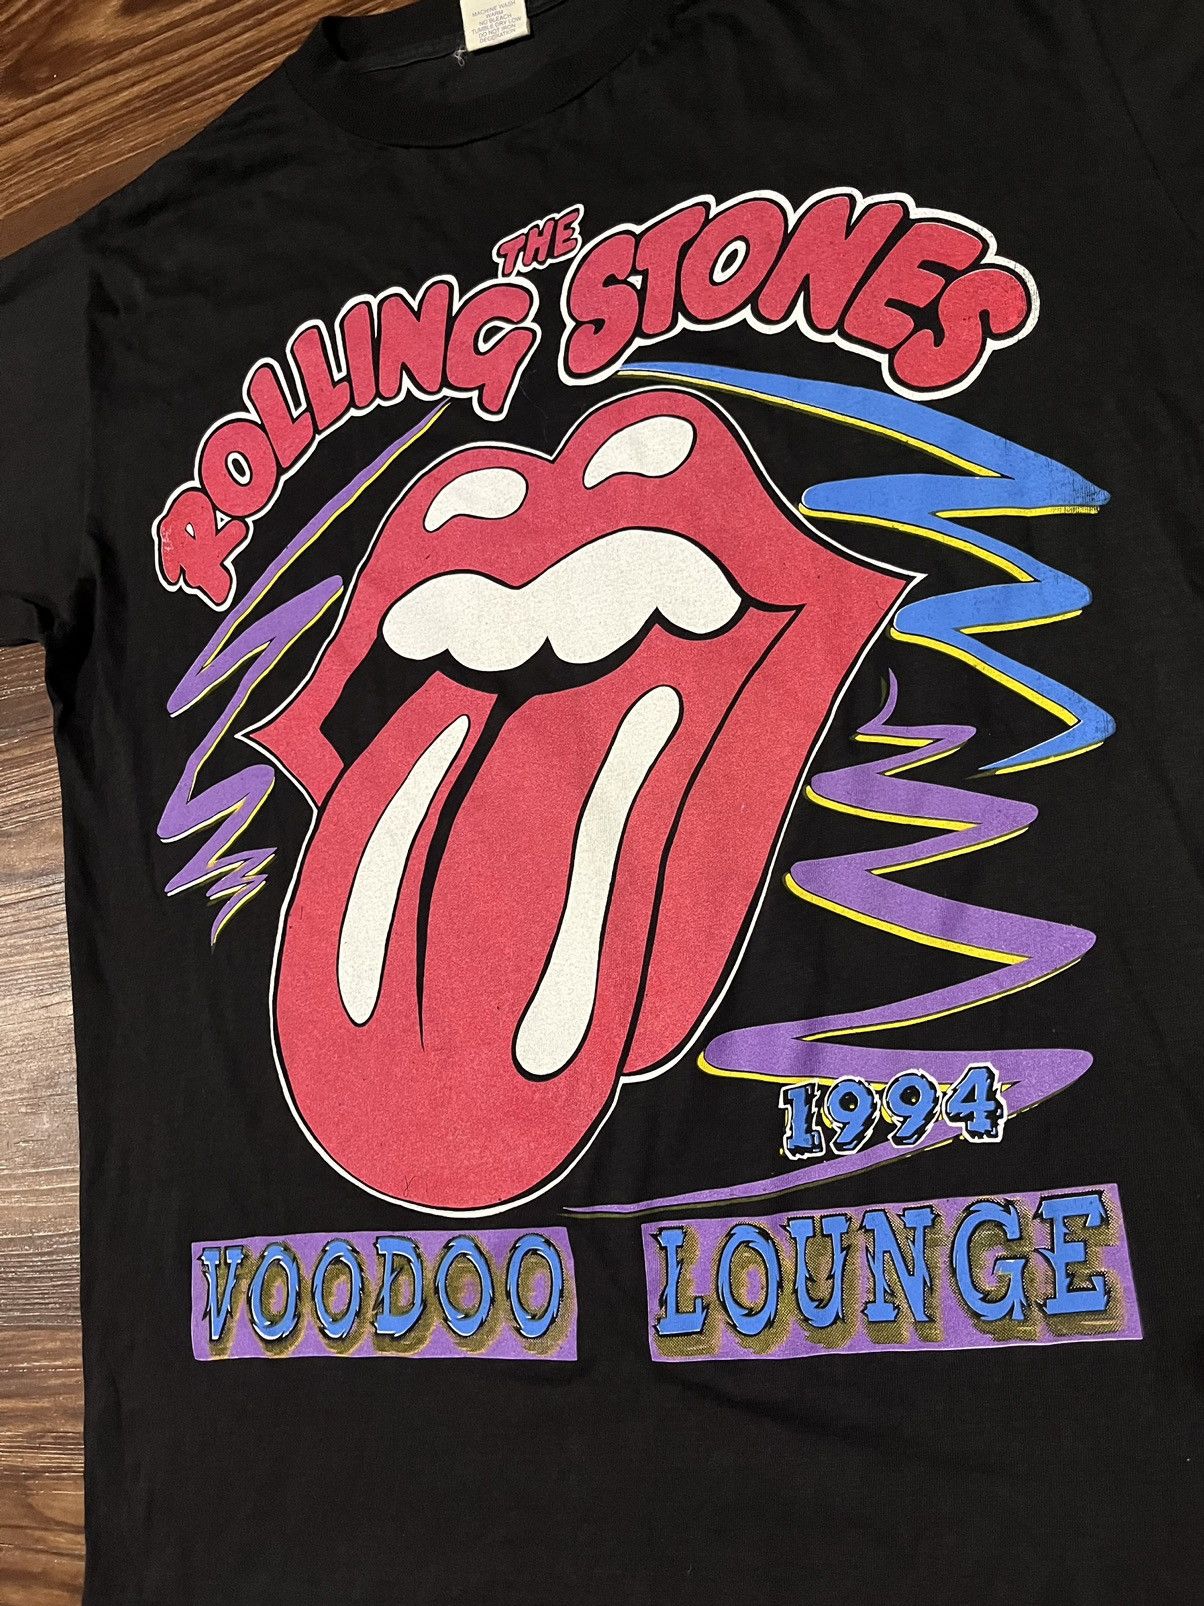 Vintage Vintage 1994 Rolling Stones voodoo lounge tee Size US XL / EU 56 / 4 - 2 Preview